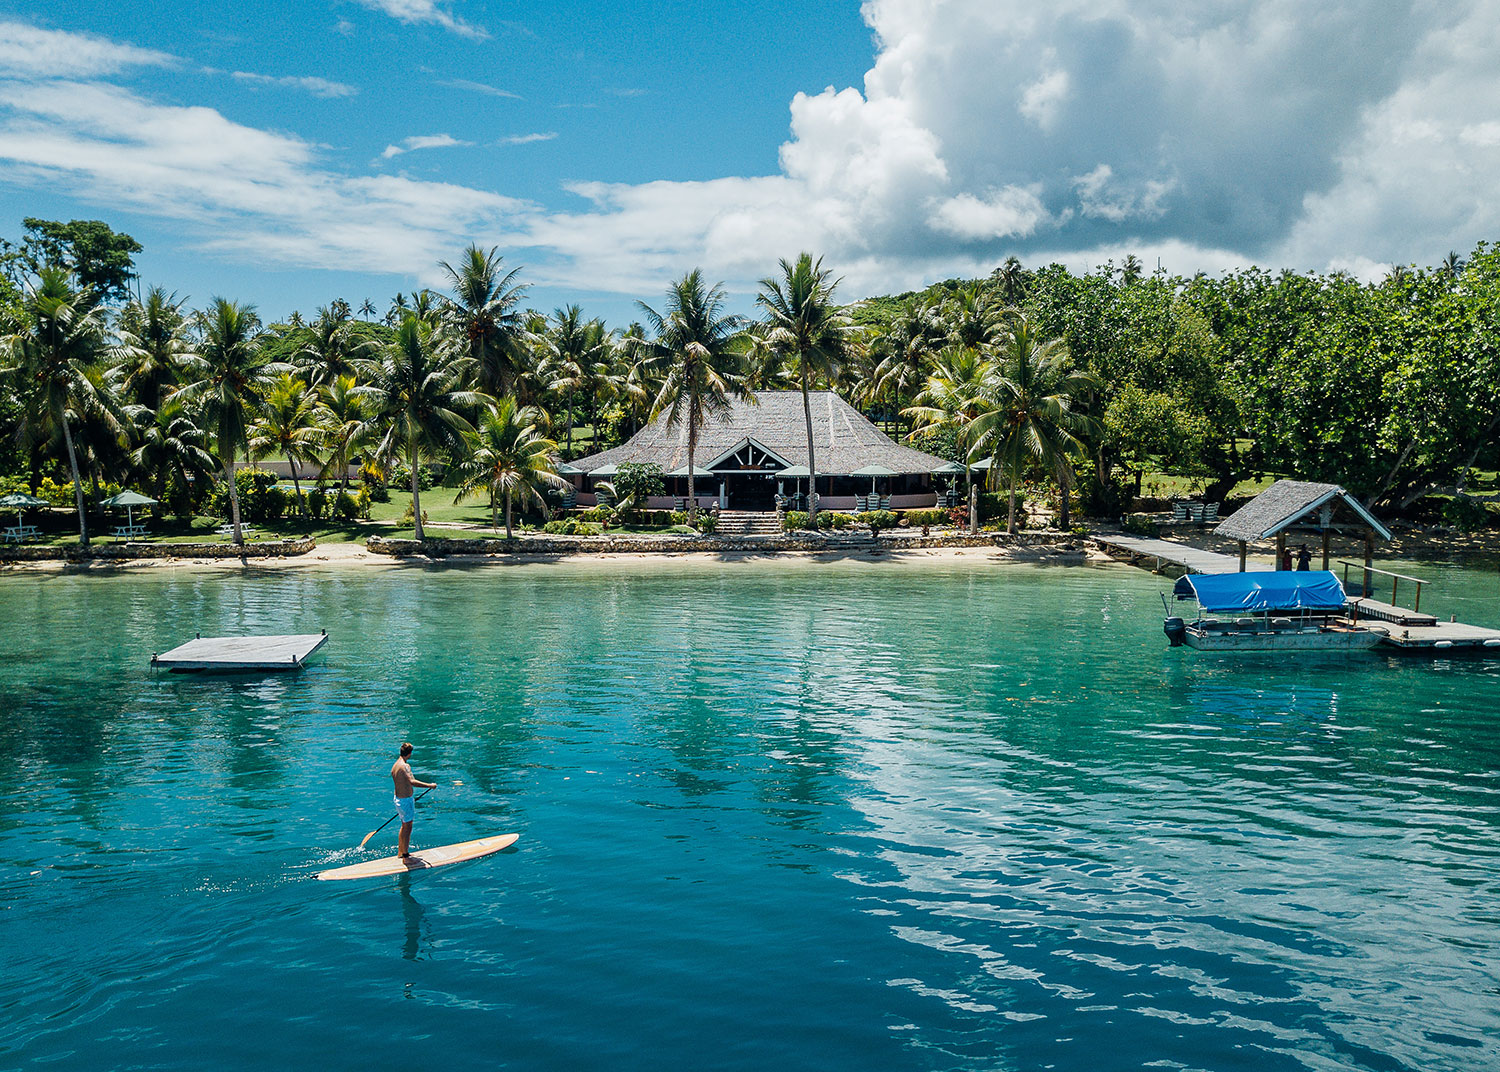 Vanuatu’s Aore Island Resort is Australian owned